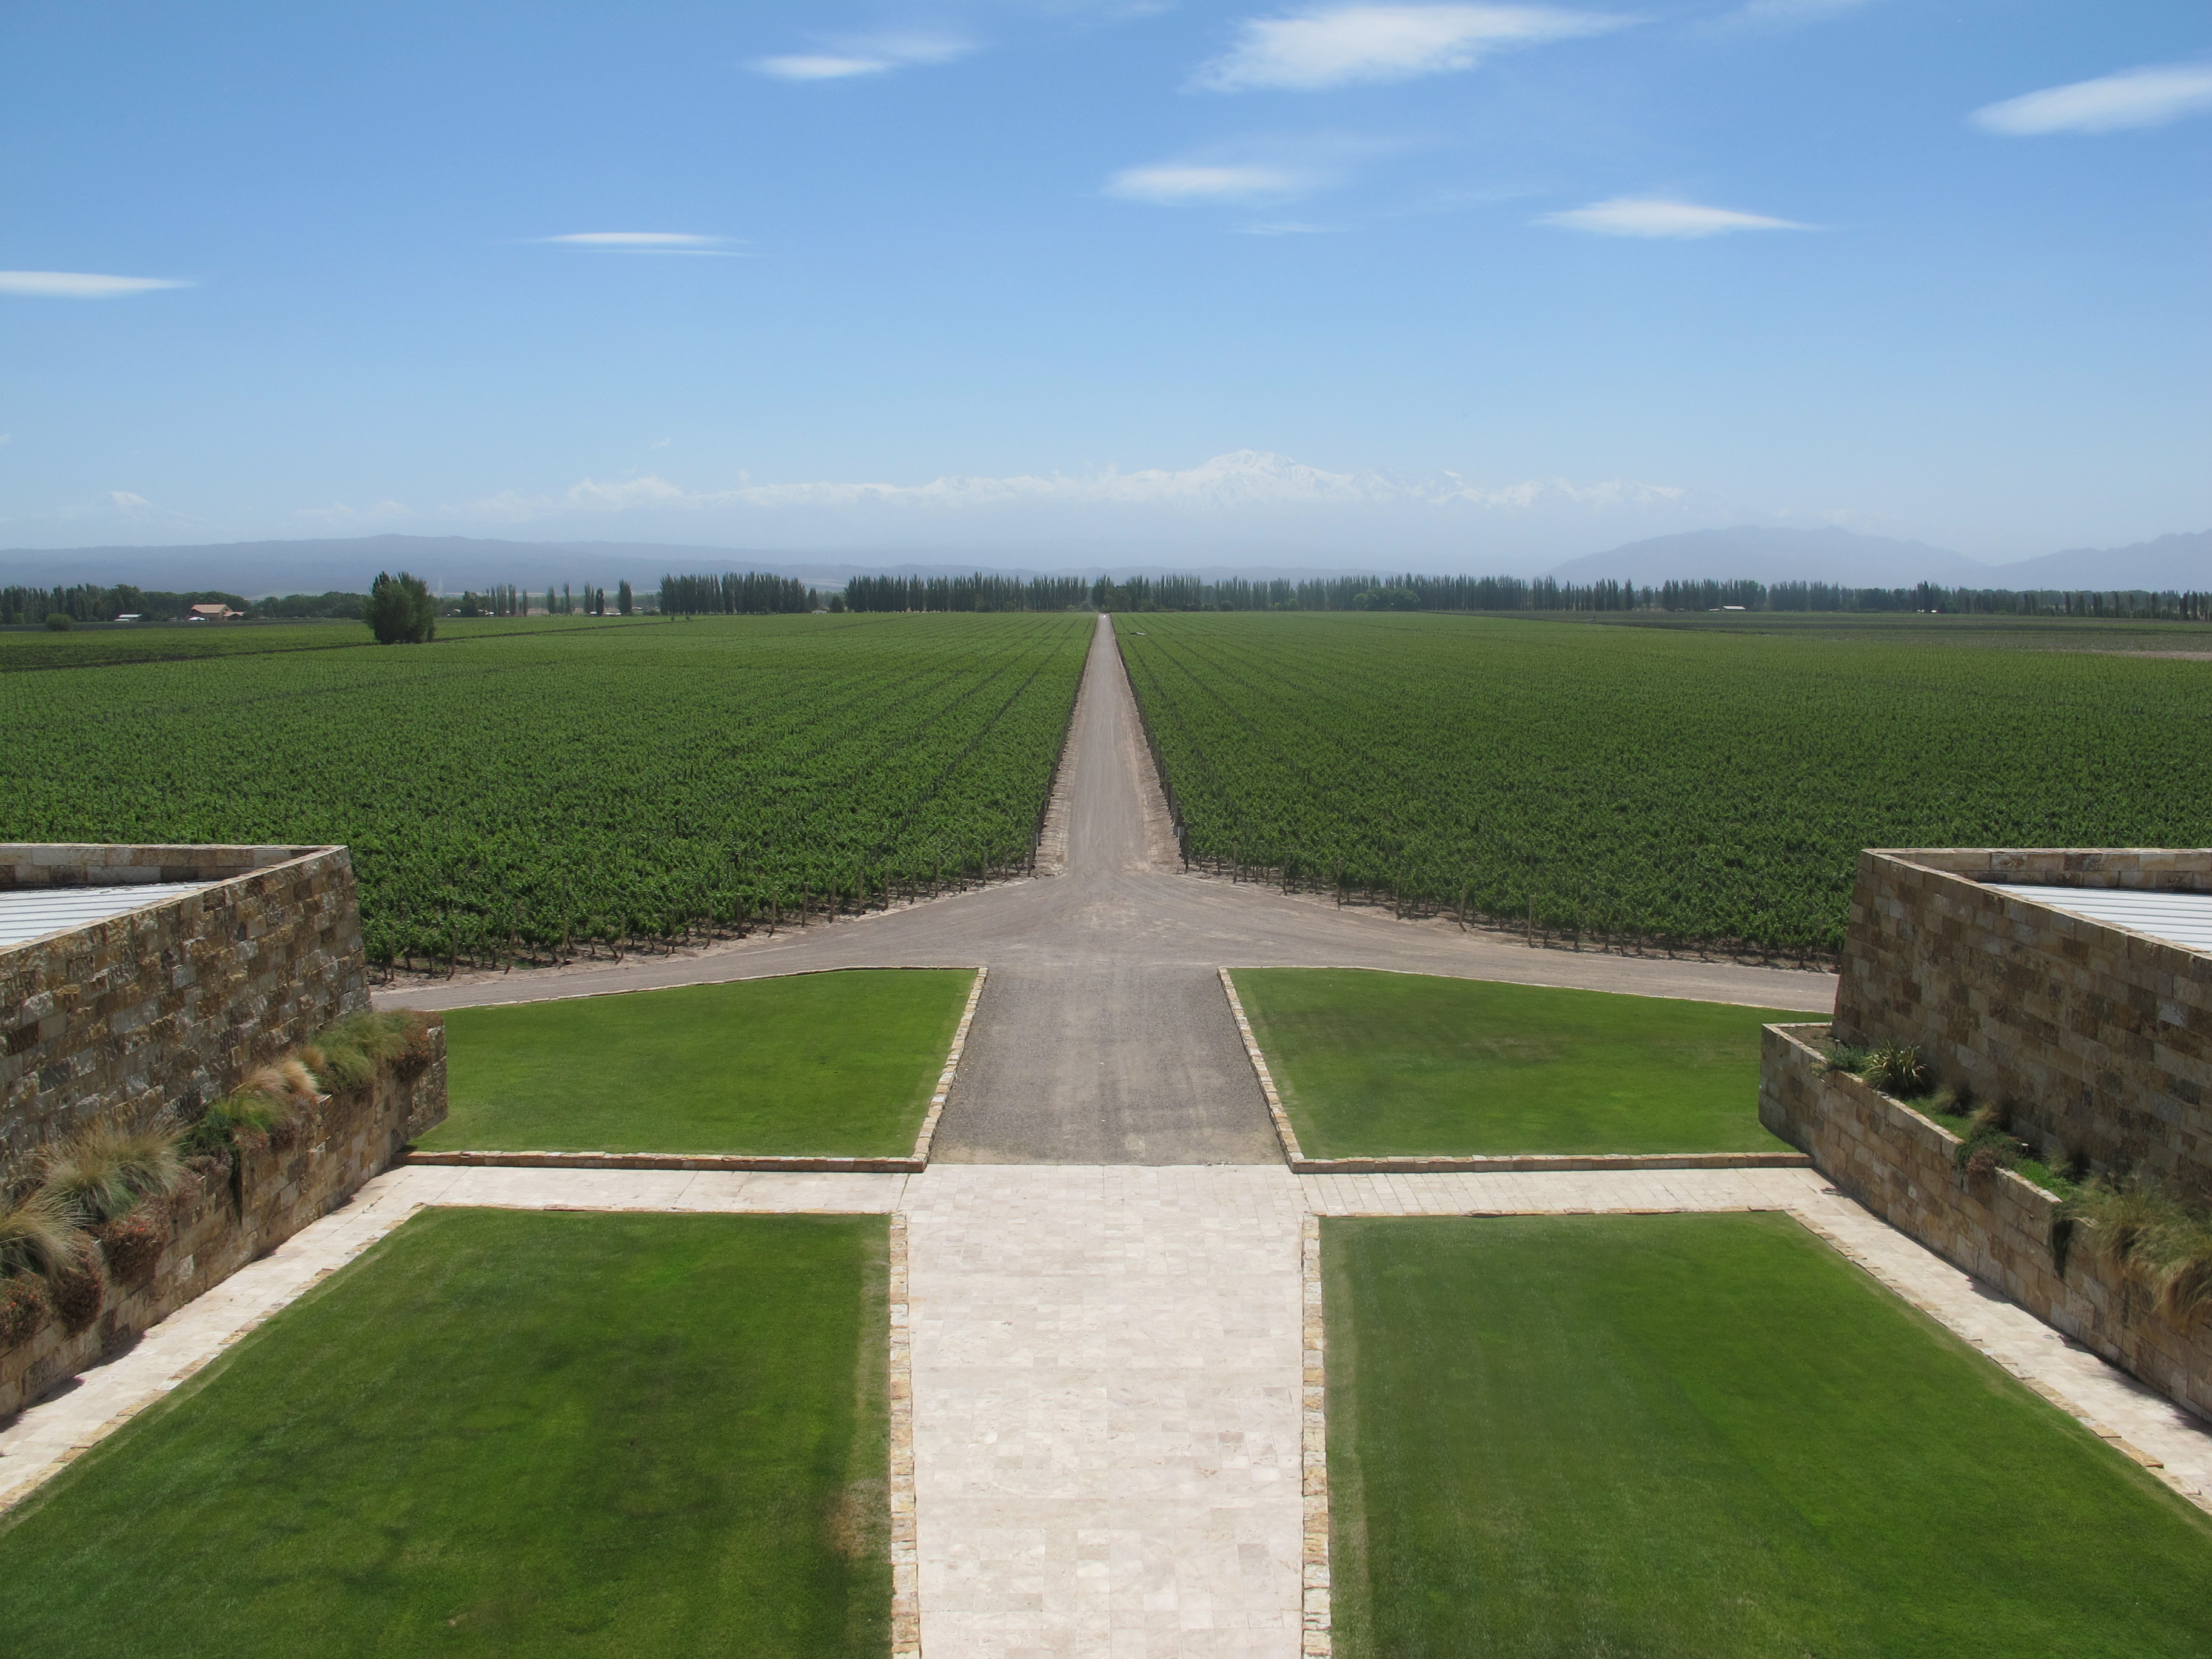 Catena Zapata vineyard in Mendoza